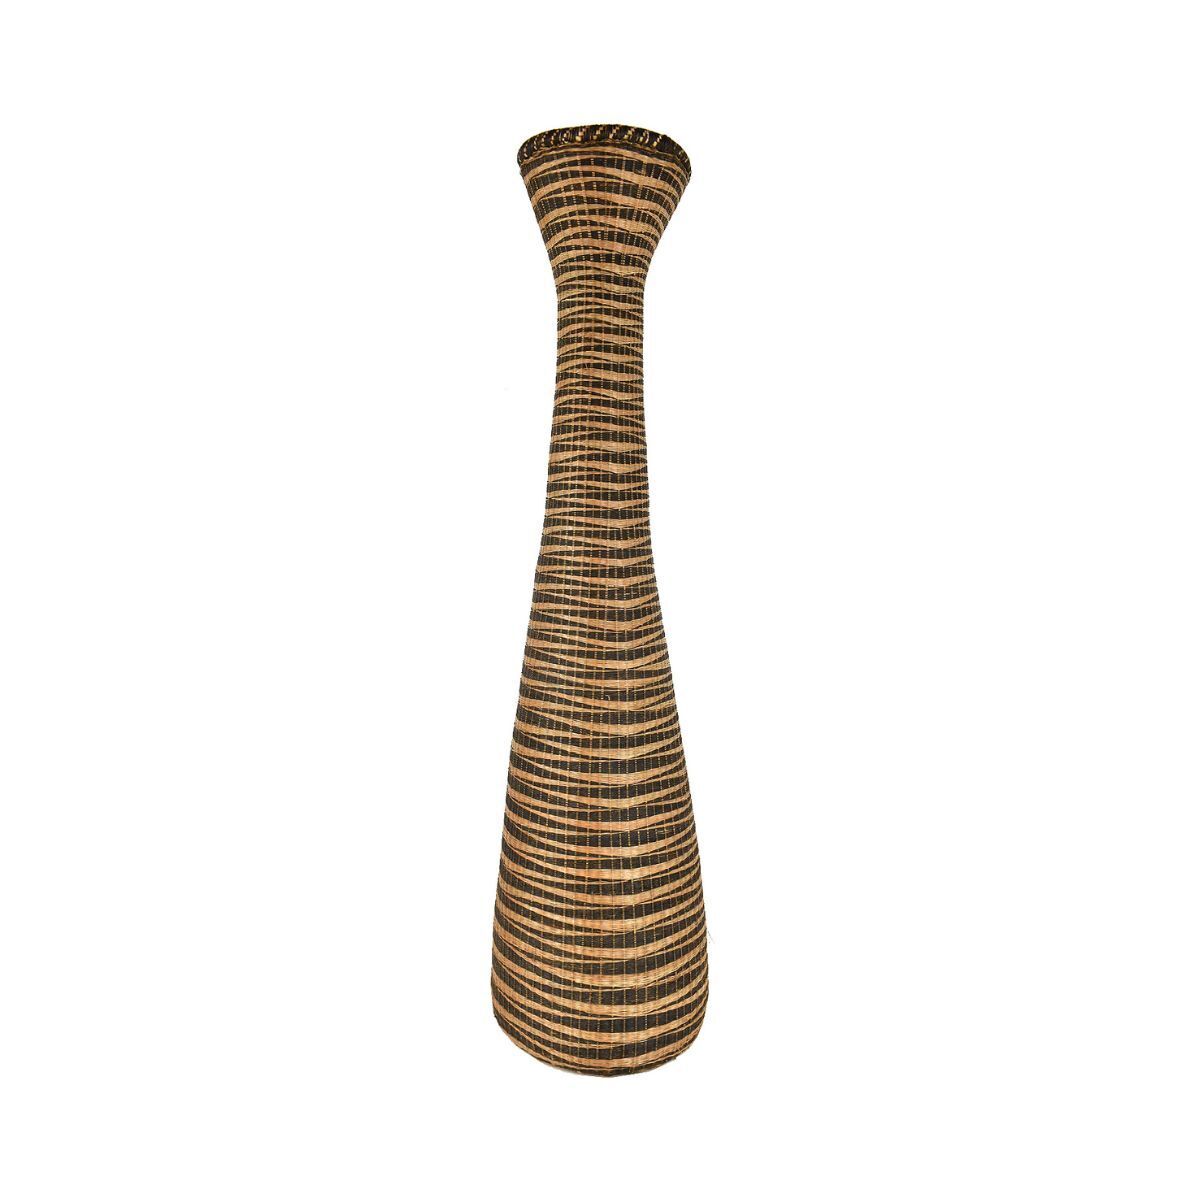 Tutsi Tight Weave Wedding Basket Vase Rwanda 32 inch